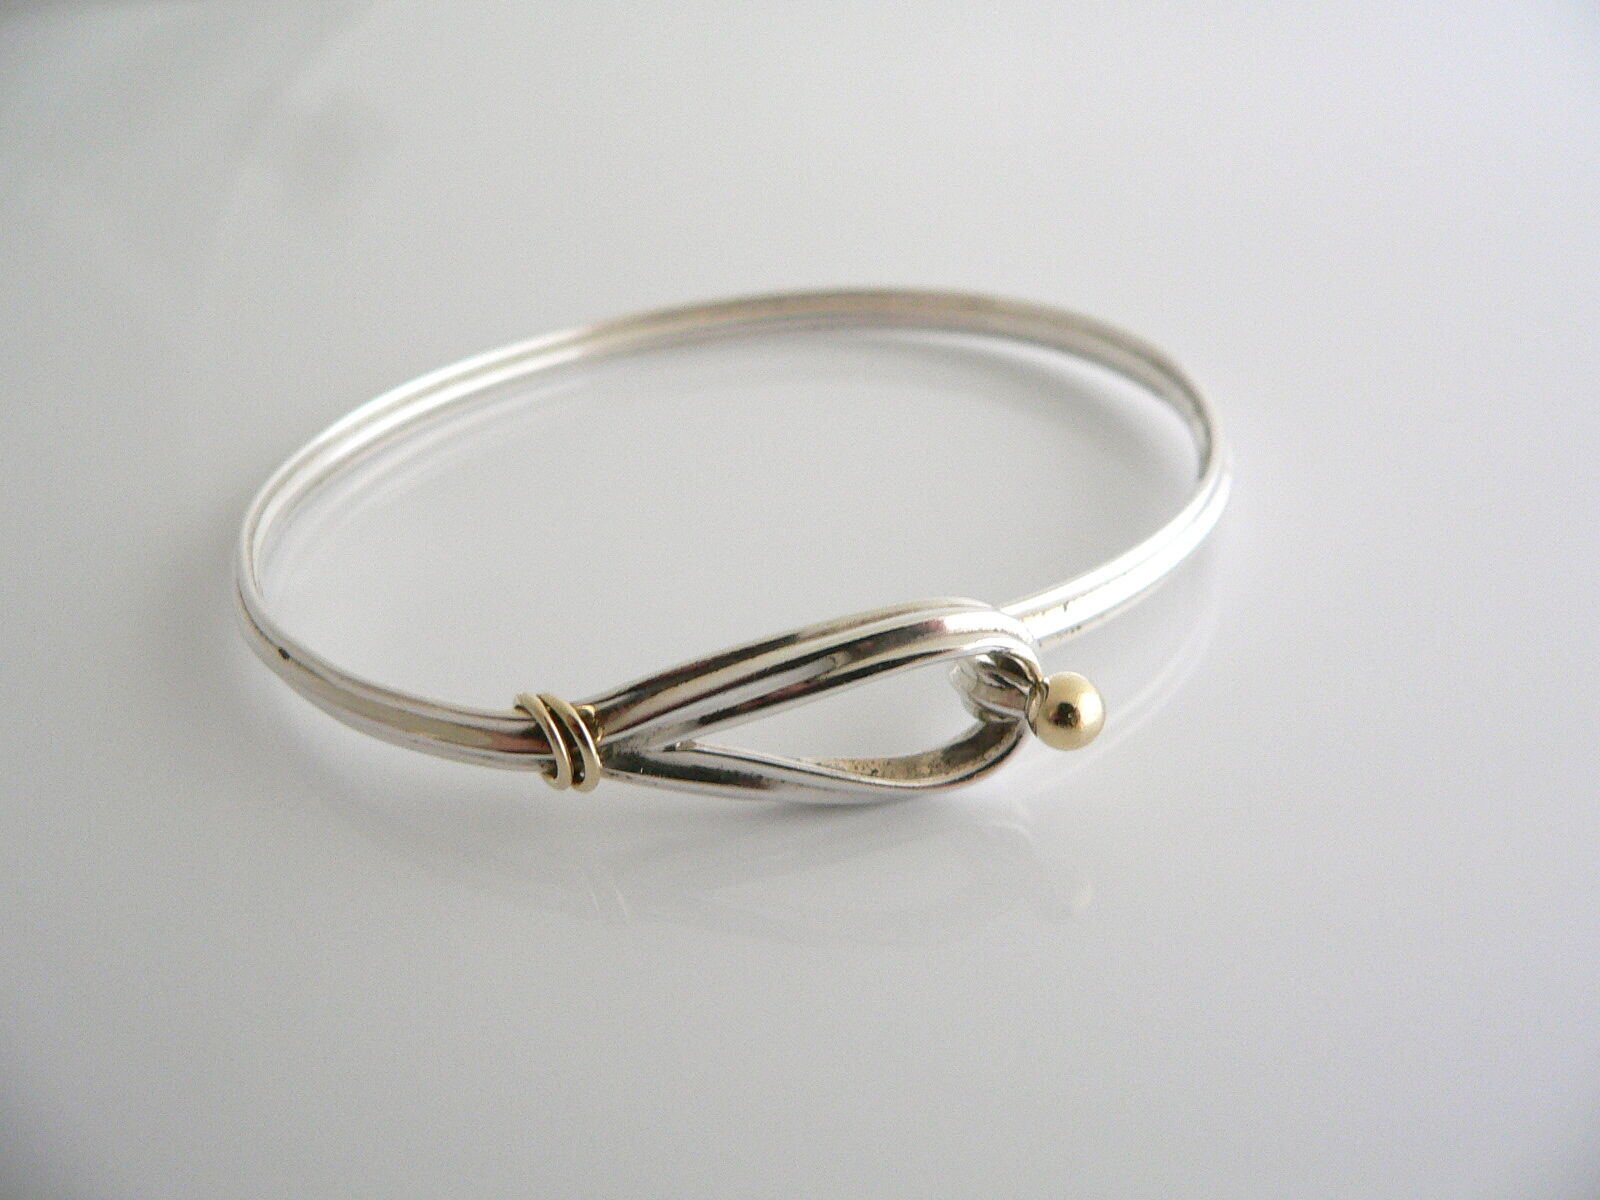  Sterling Silver Hook and Eye Bracelet for Women